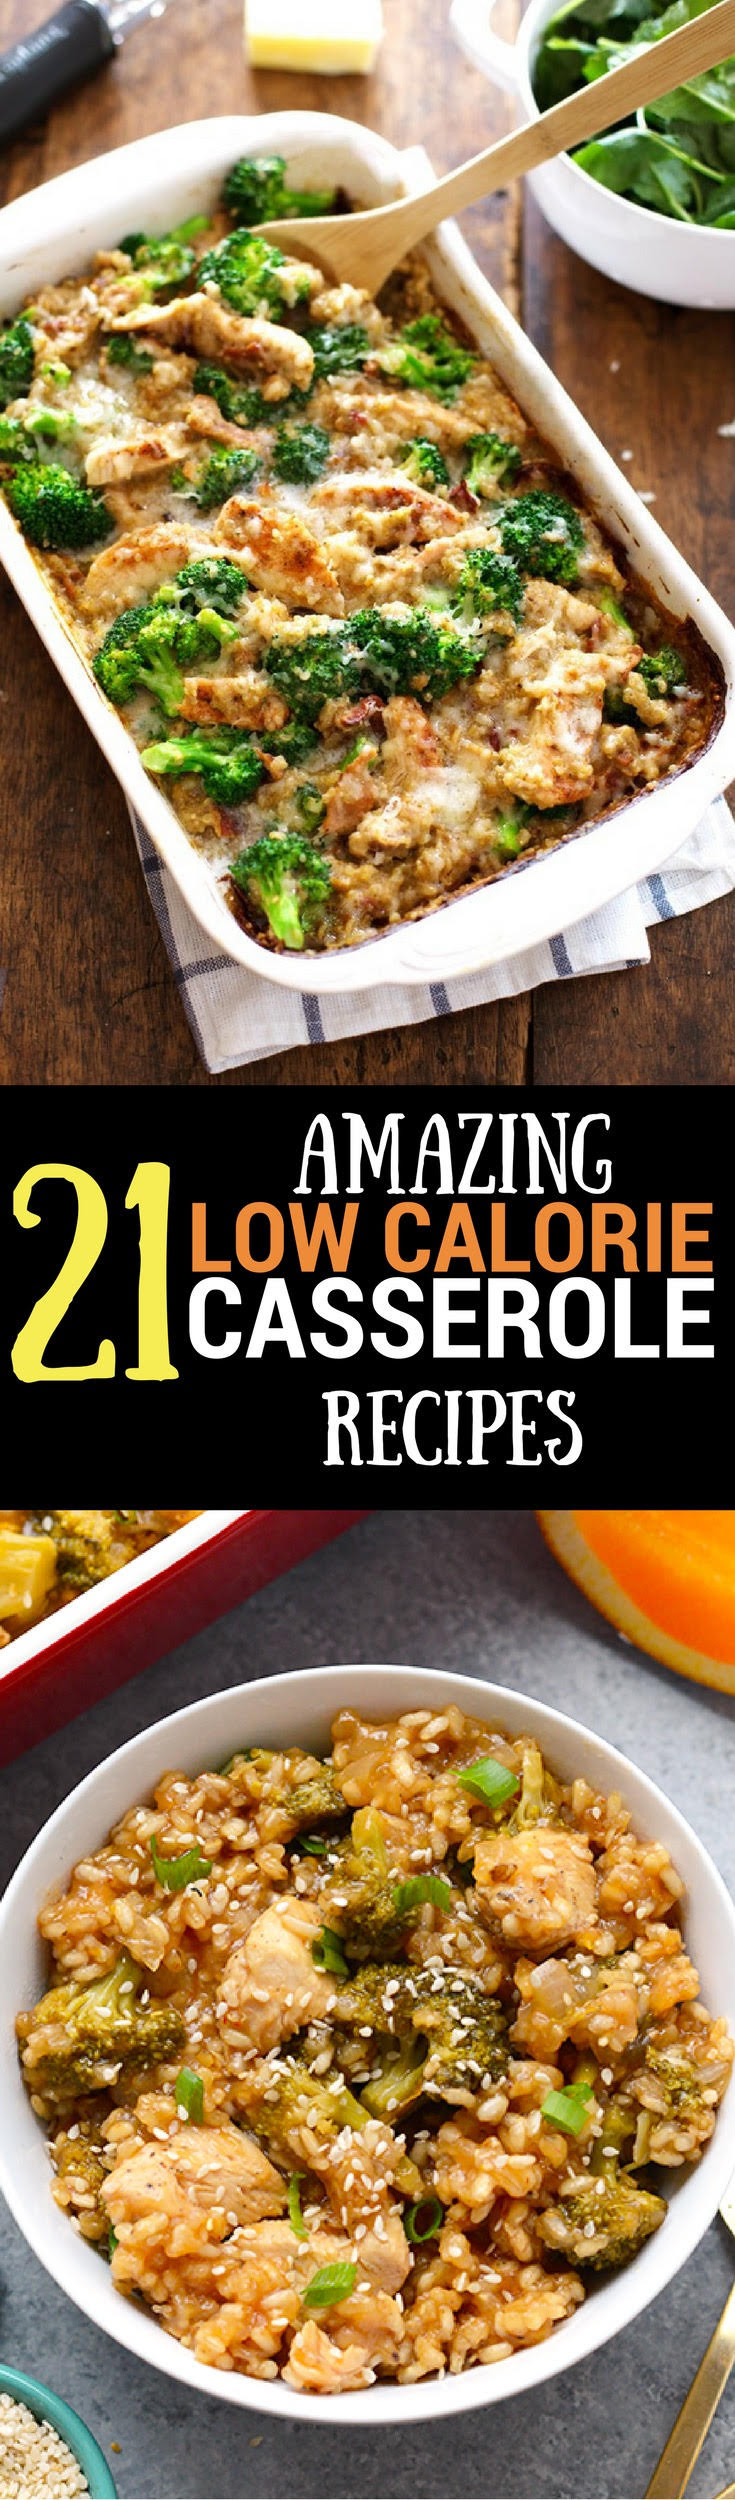 Low Calorie Chicken Casserole Recipes
 21 Amazing Low Calorie Casserole Recipes Meal Prep on Fleek™